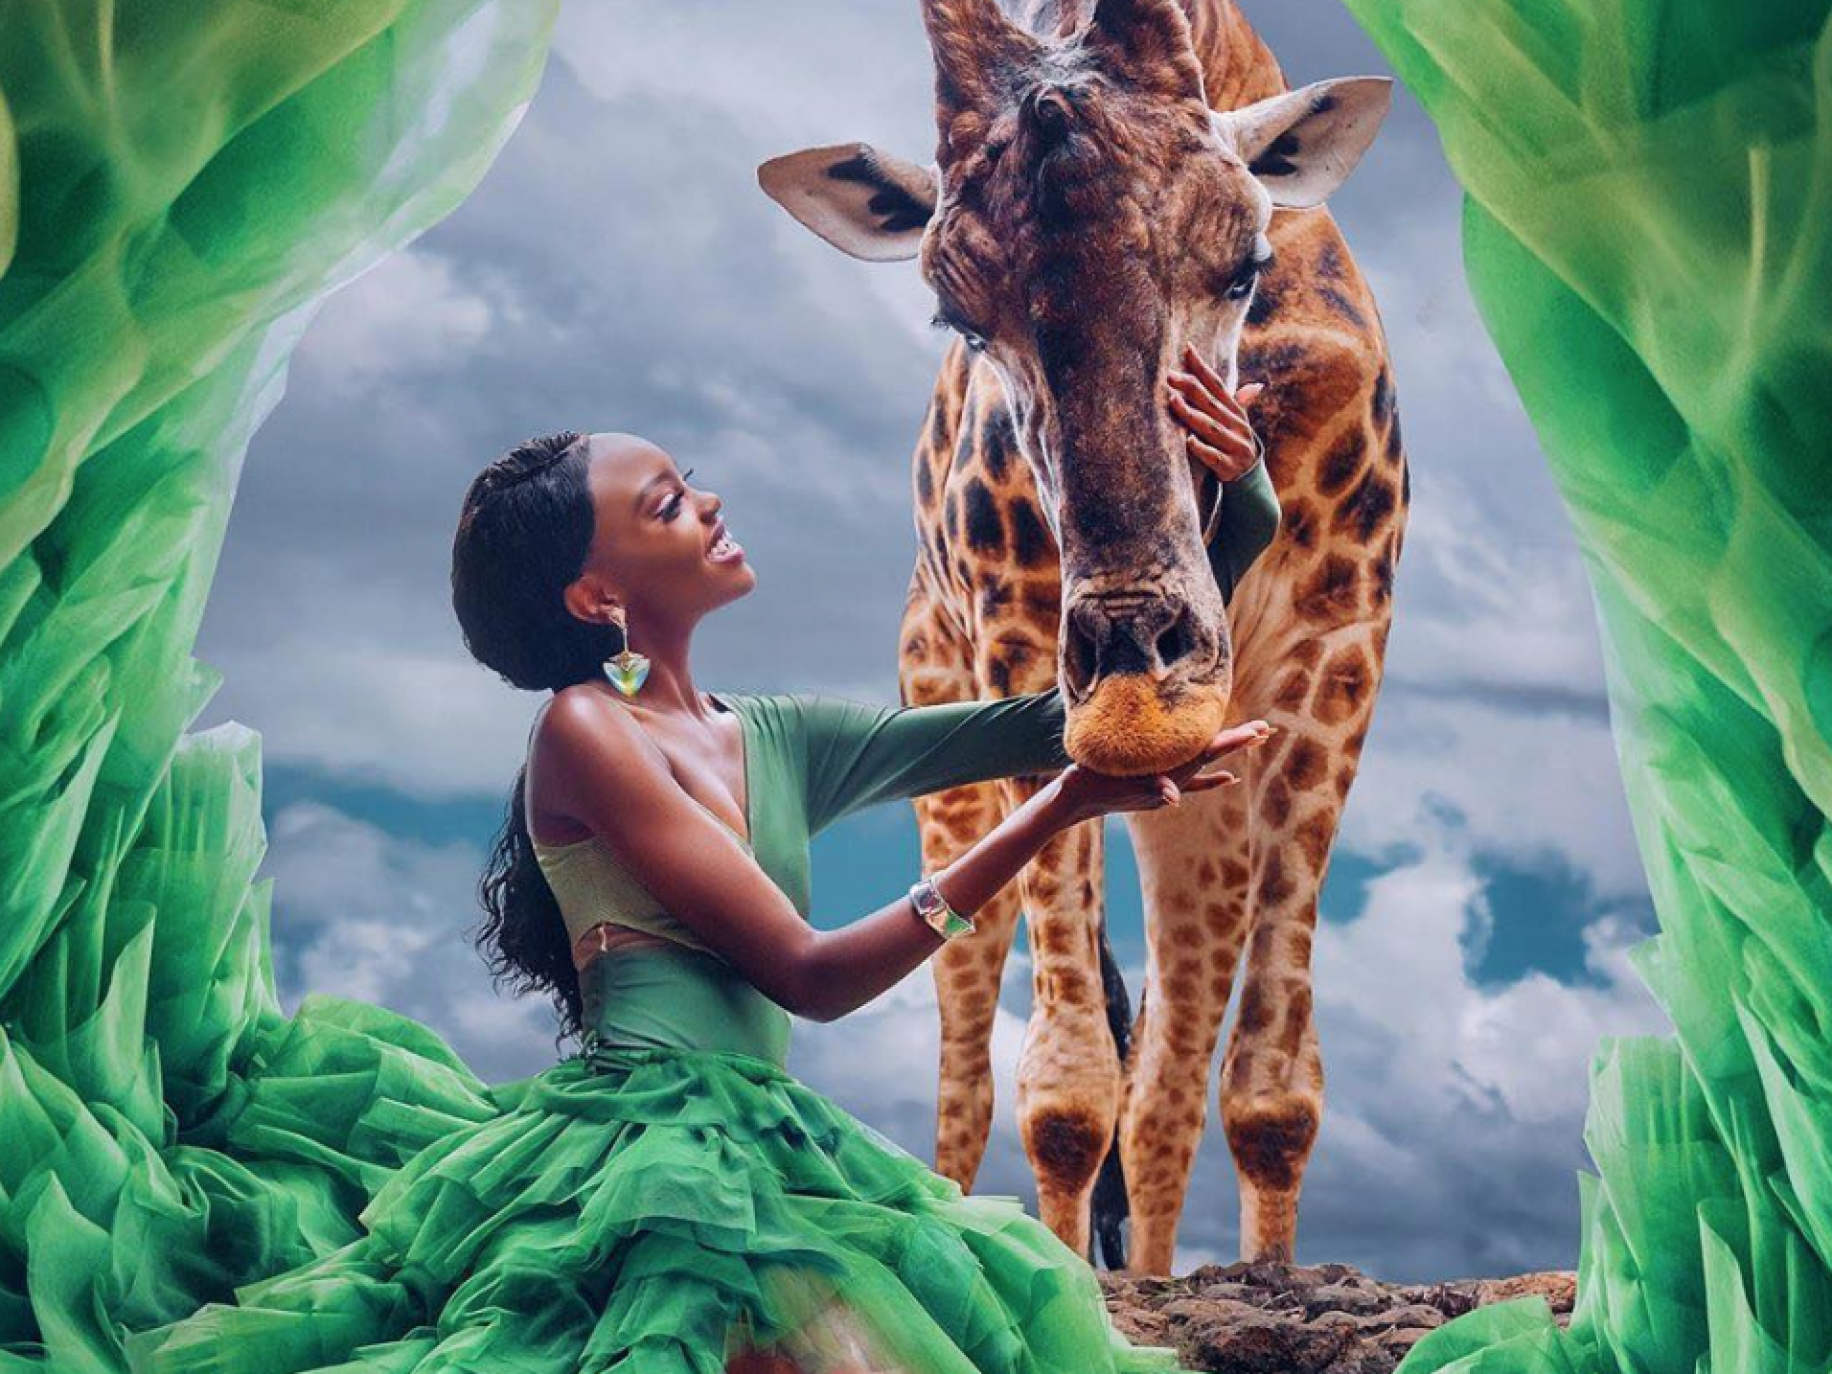 Miss Universe Kenya Stacy Michuki's Stunning Safari Photoshoot Will Leave You Speechless